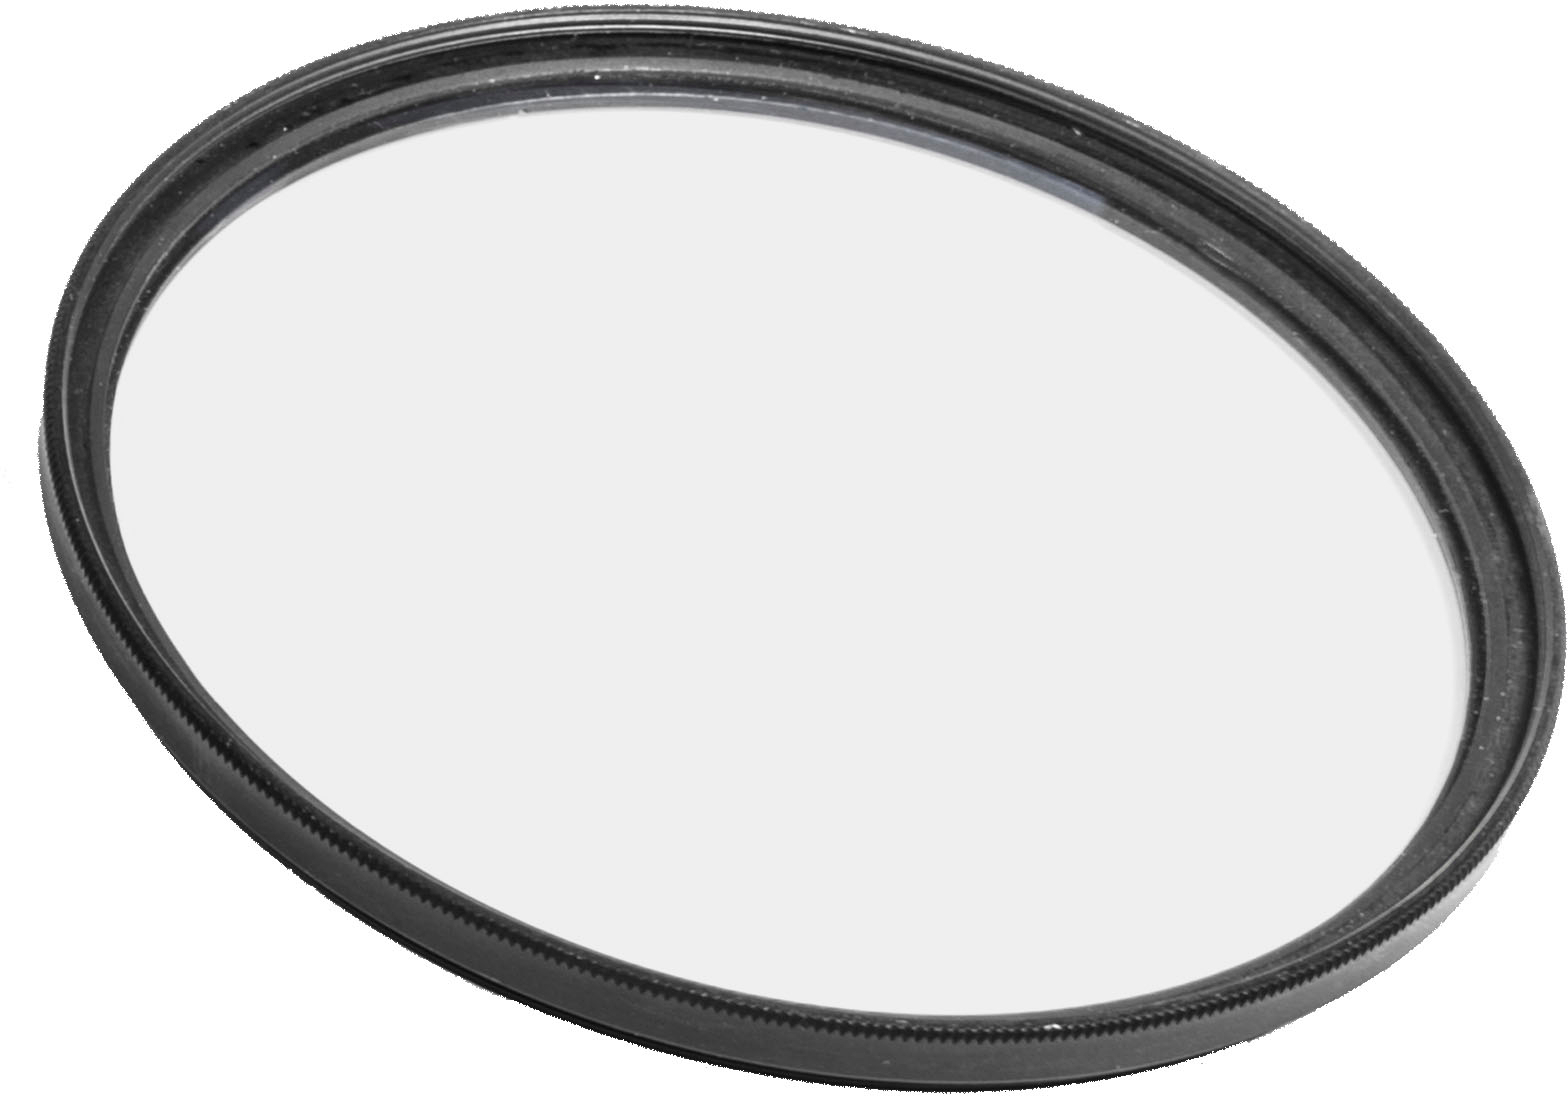 Angle View: Sunpak - Circle 67mm Ultraviolet Lens Filter